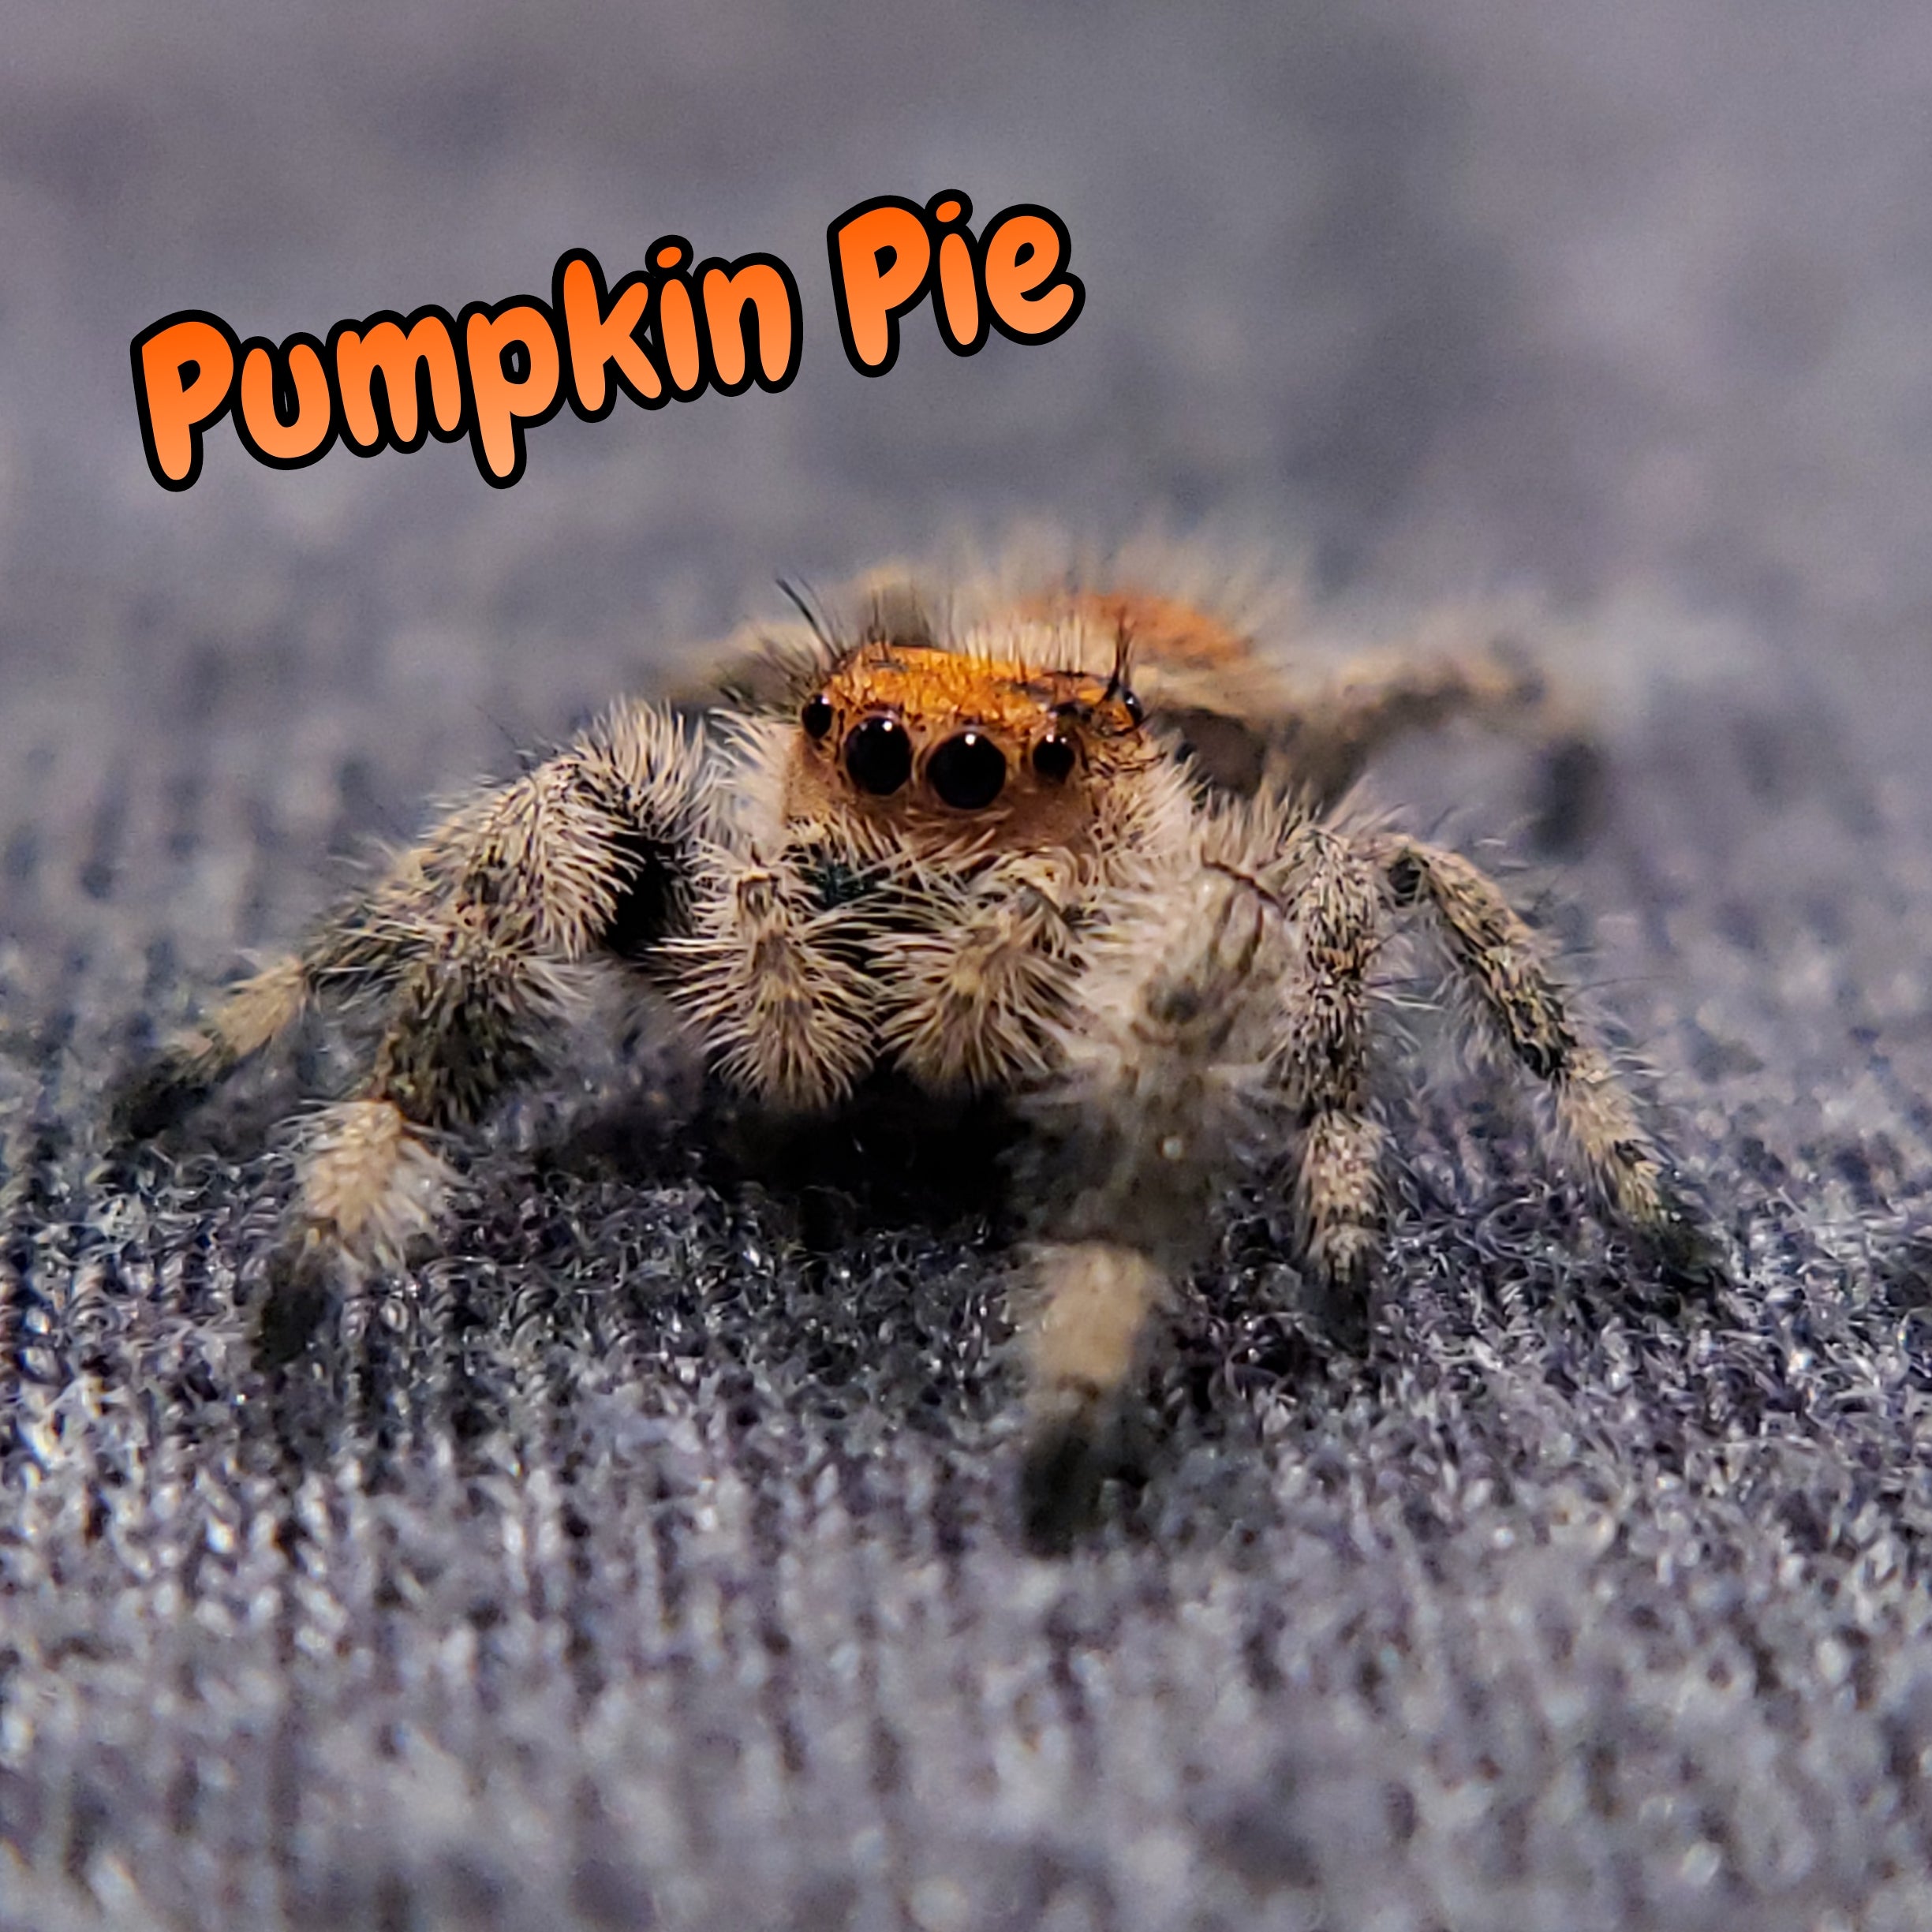 Regal Jumping Spider "Pumpkin Pie"